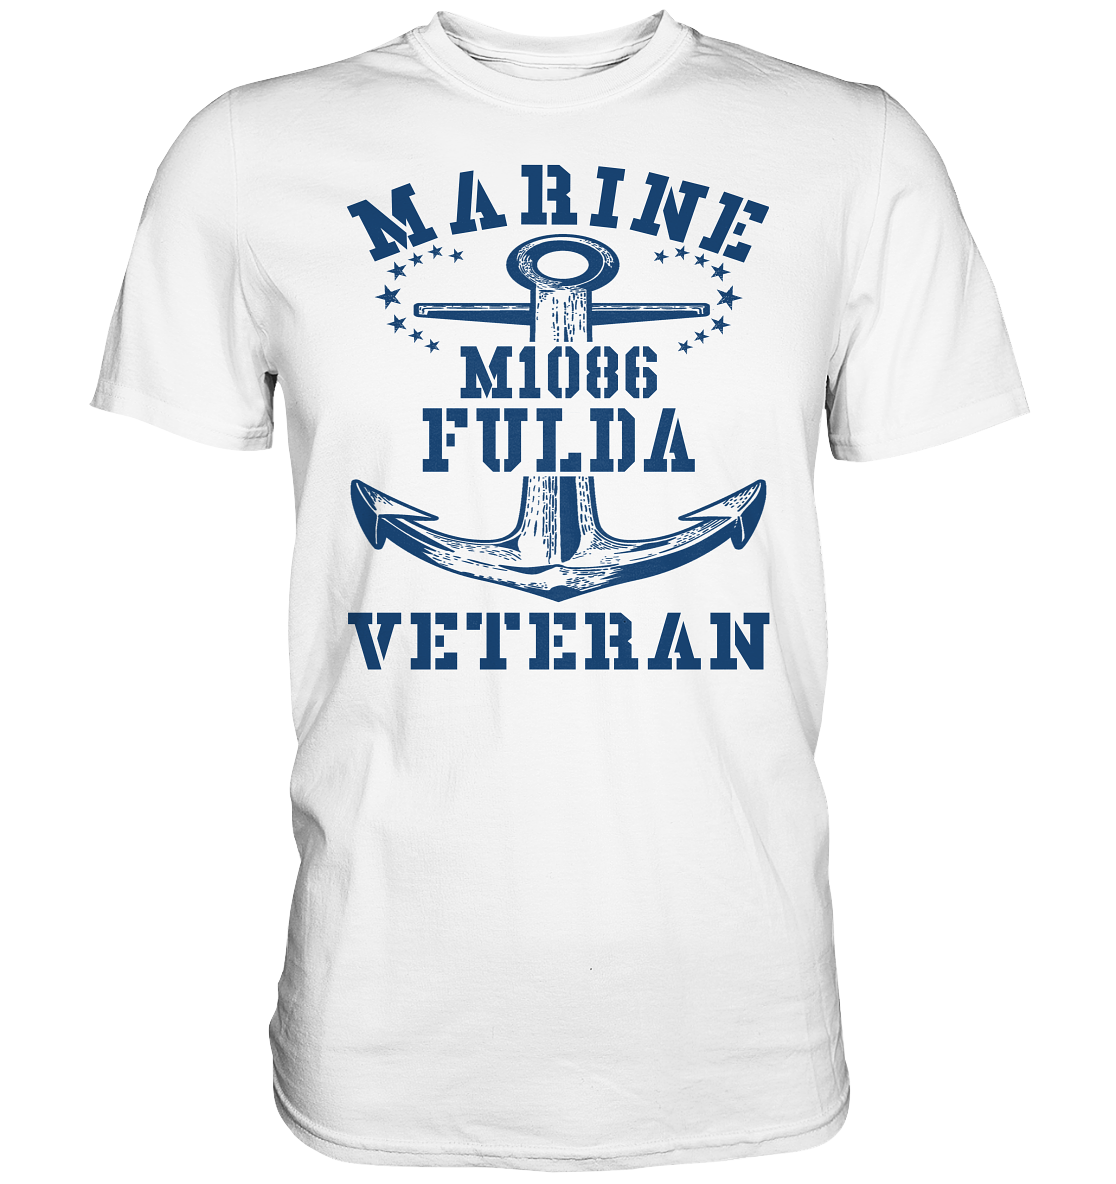 Marine Veteran M1086 FULDA - Premium Shirt